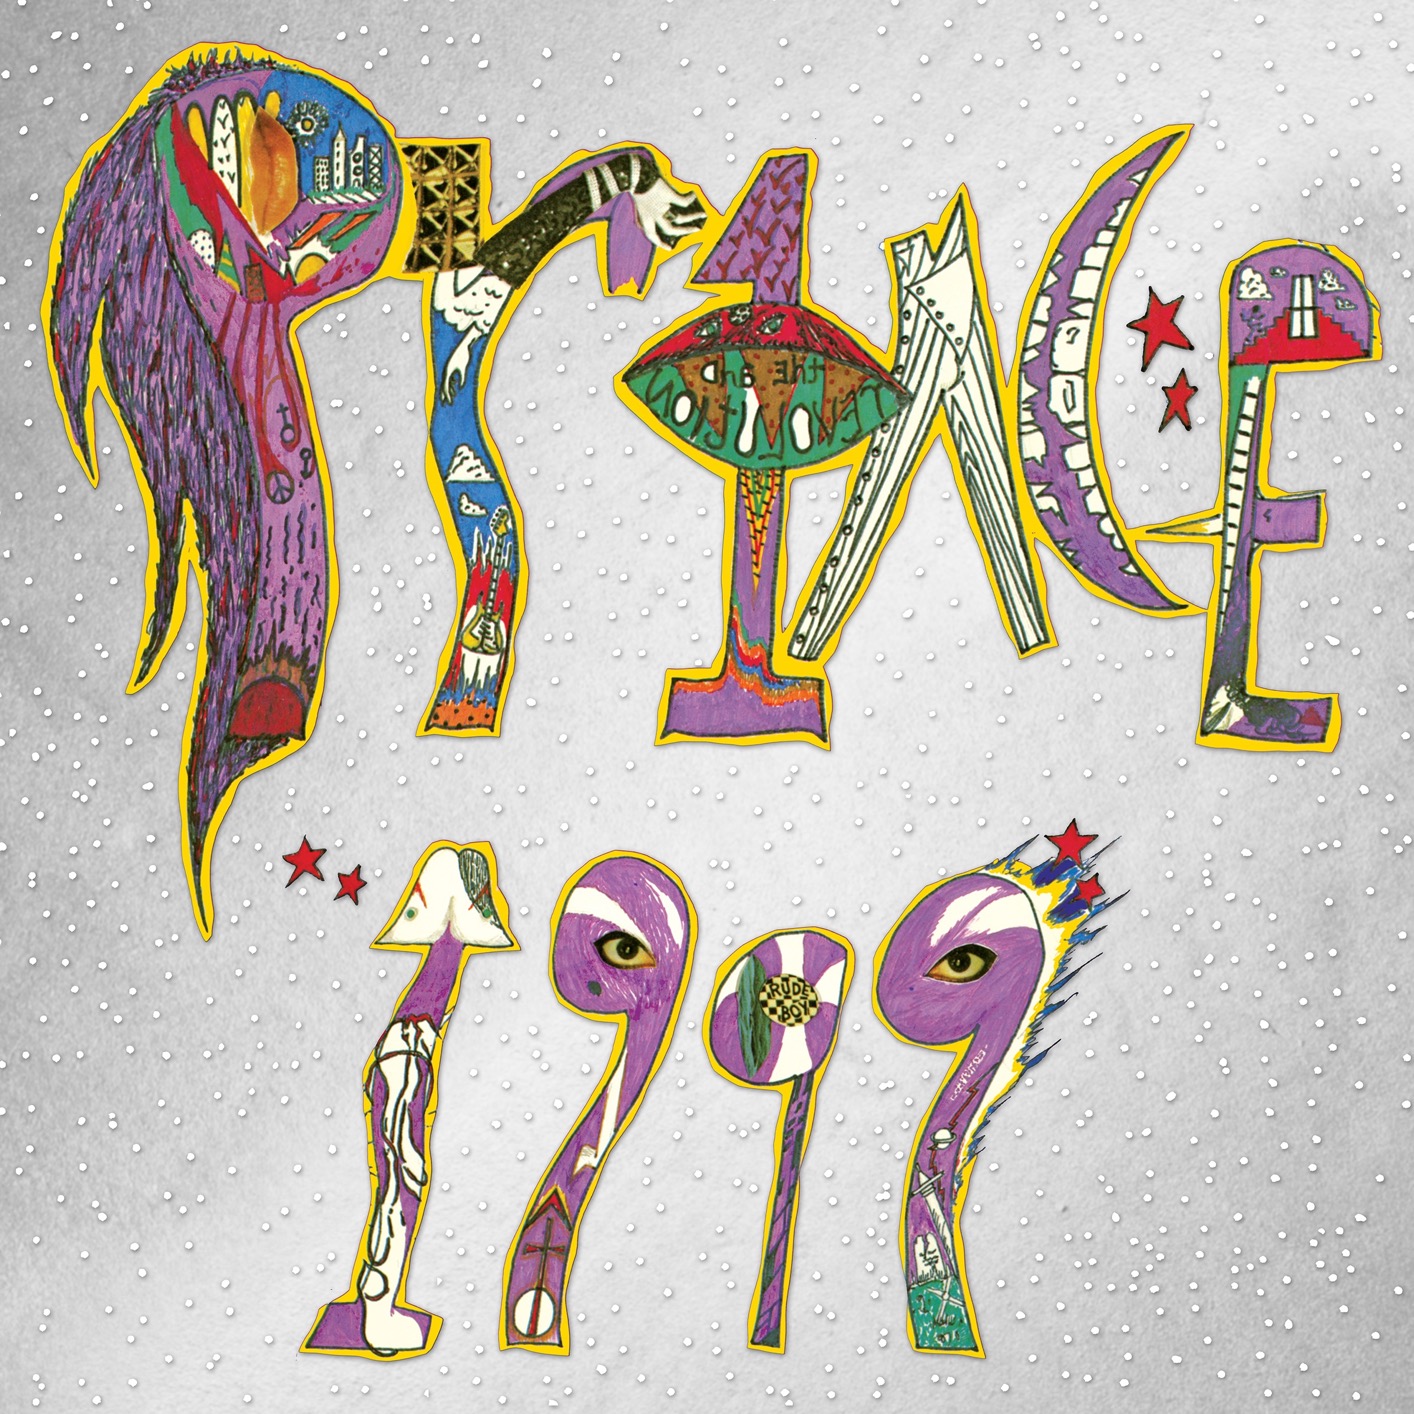 Prince - 1999 (Super Deluxe Edition) (1982/2019) [FLAC 24bit/44,1kHz]